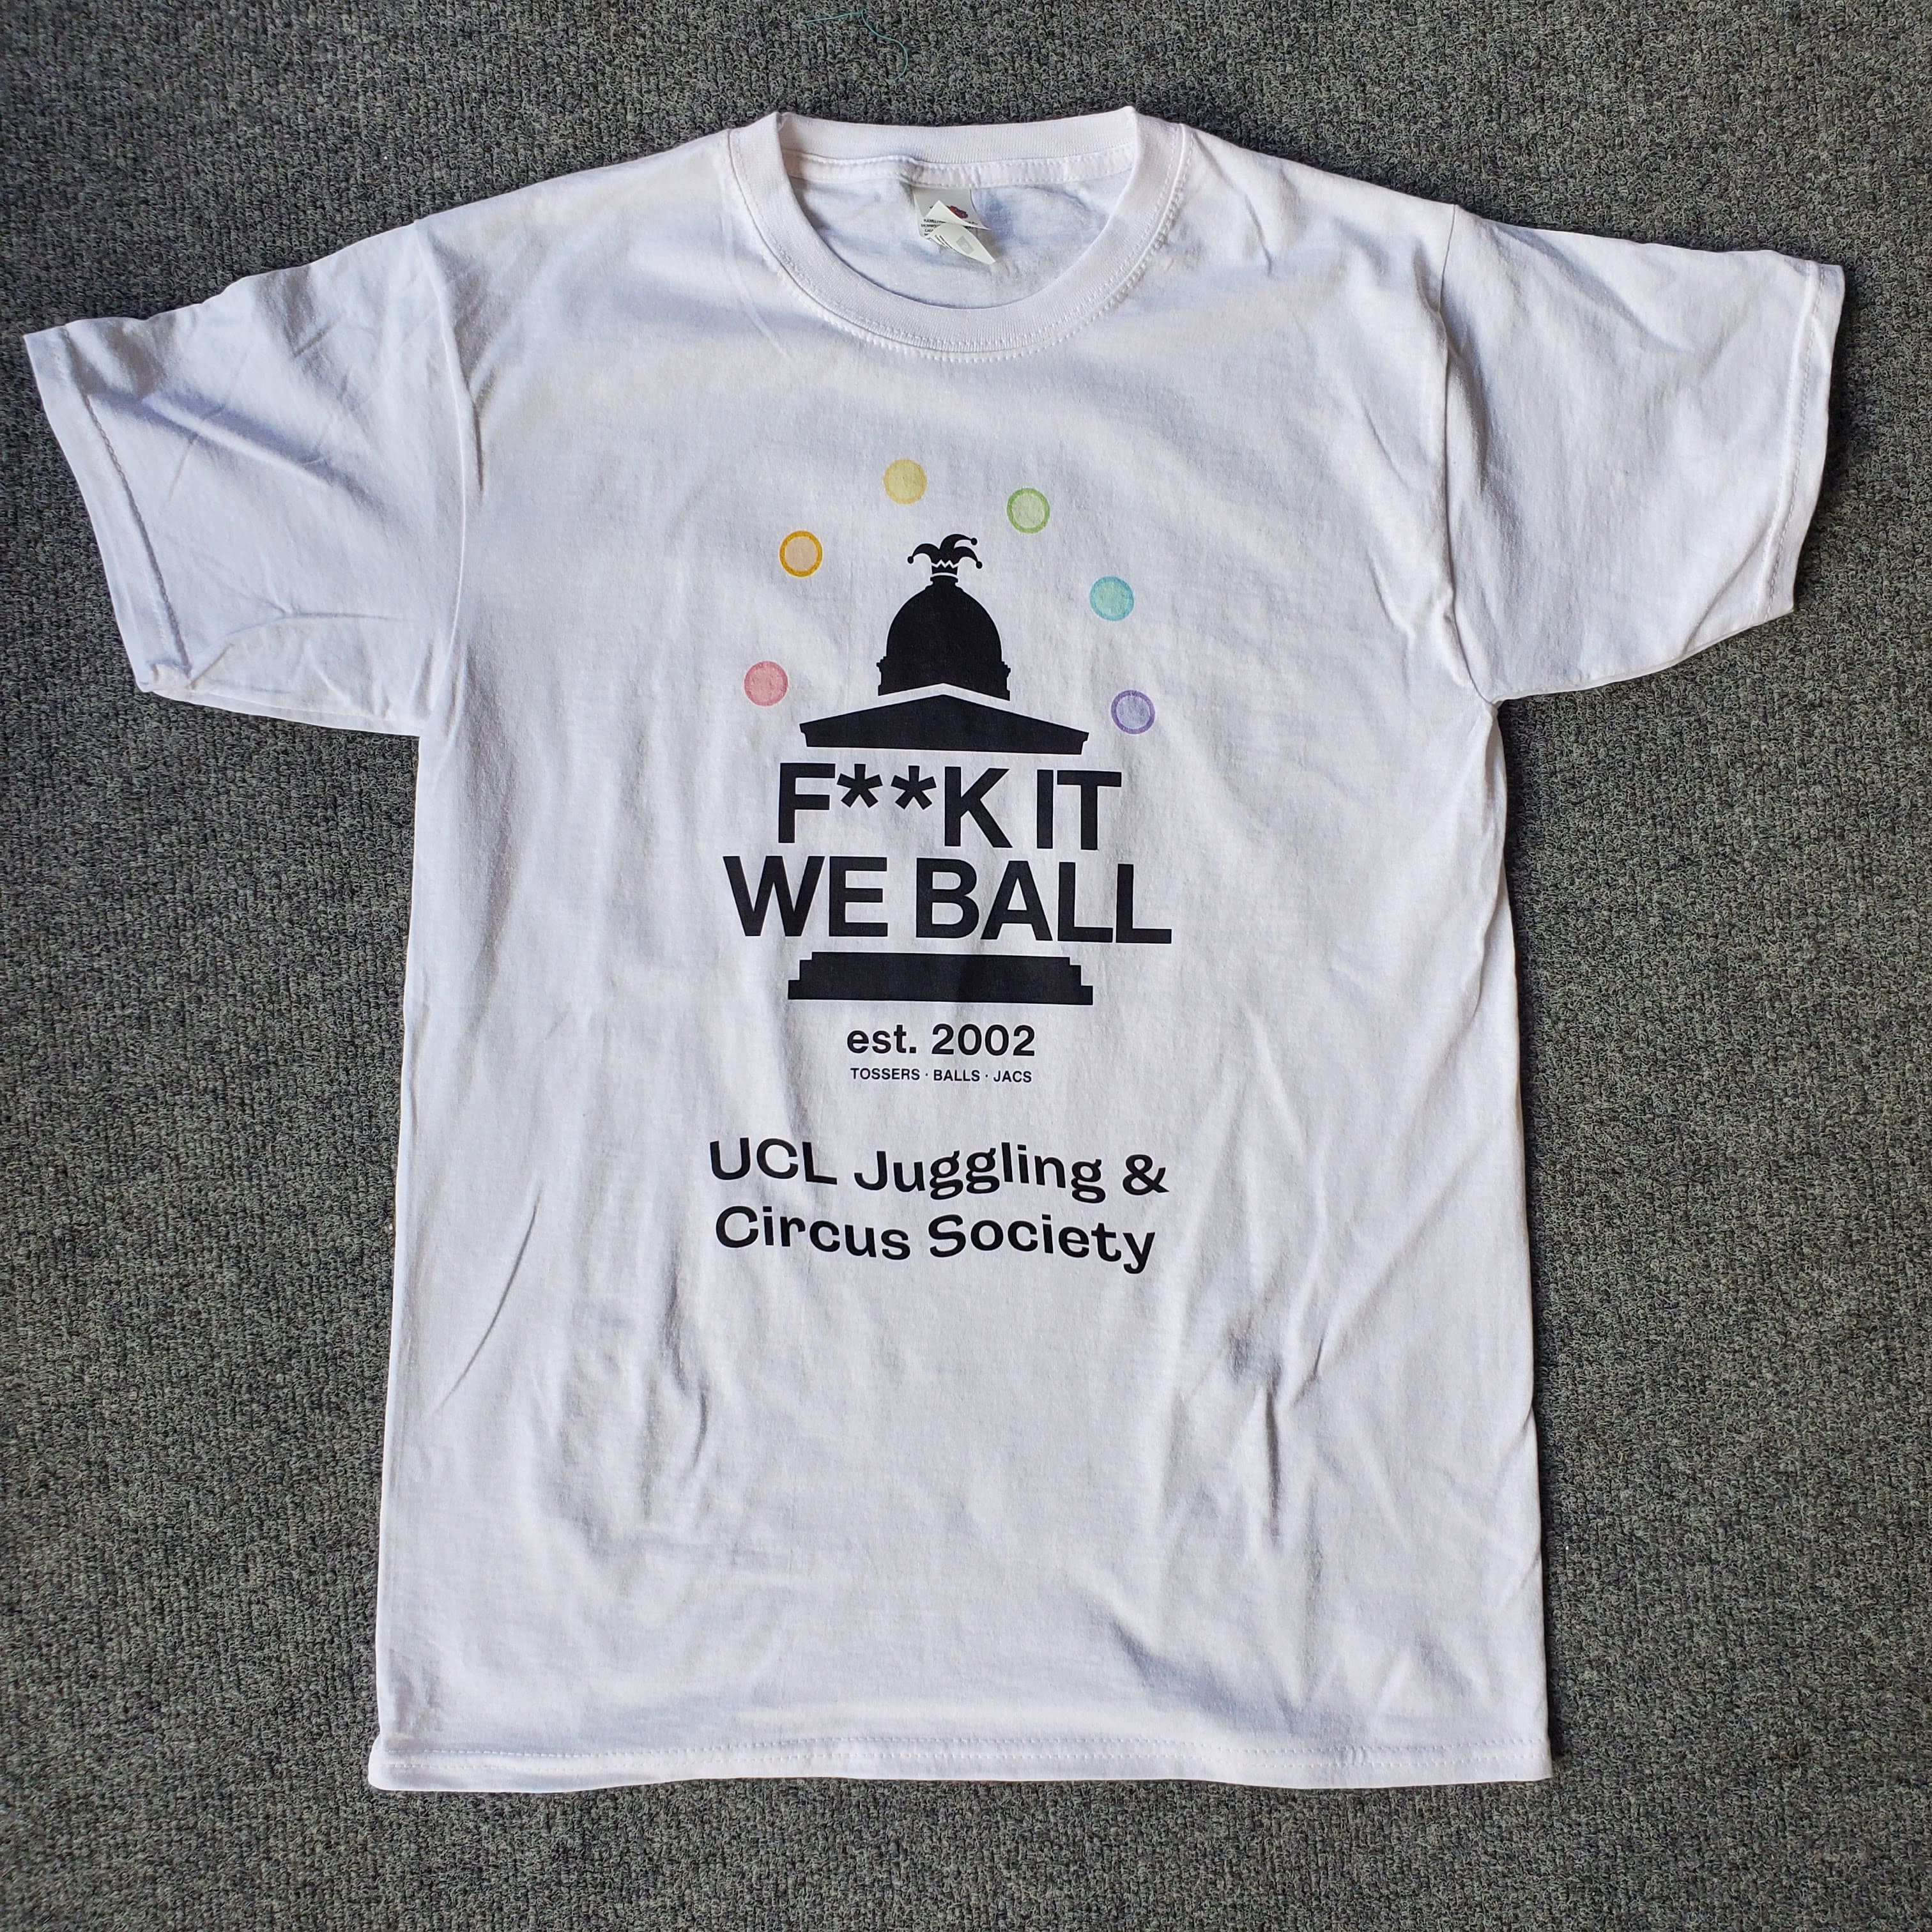 White "F**k It We Ball" T-Shirt